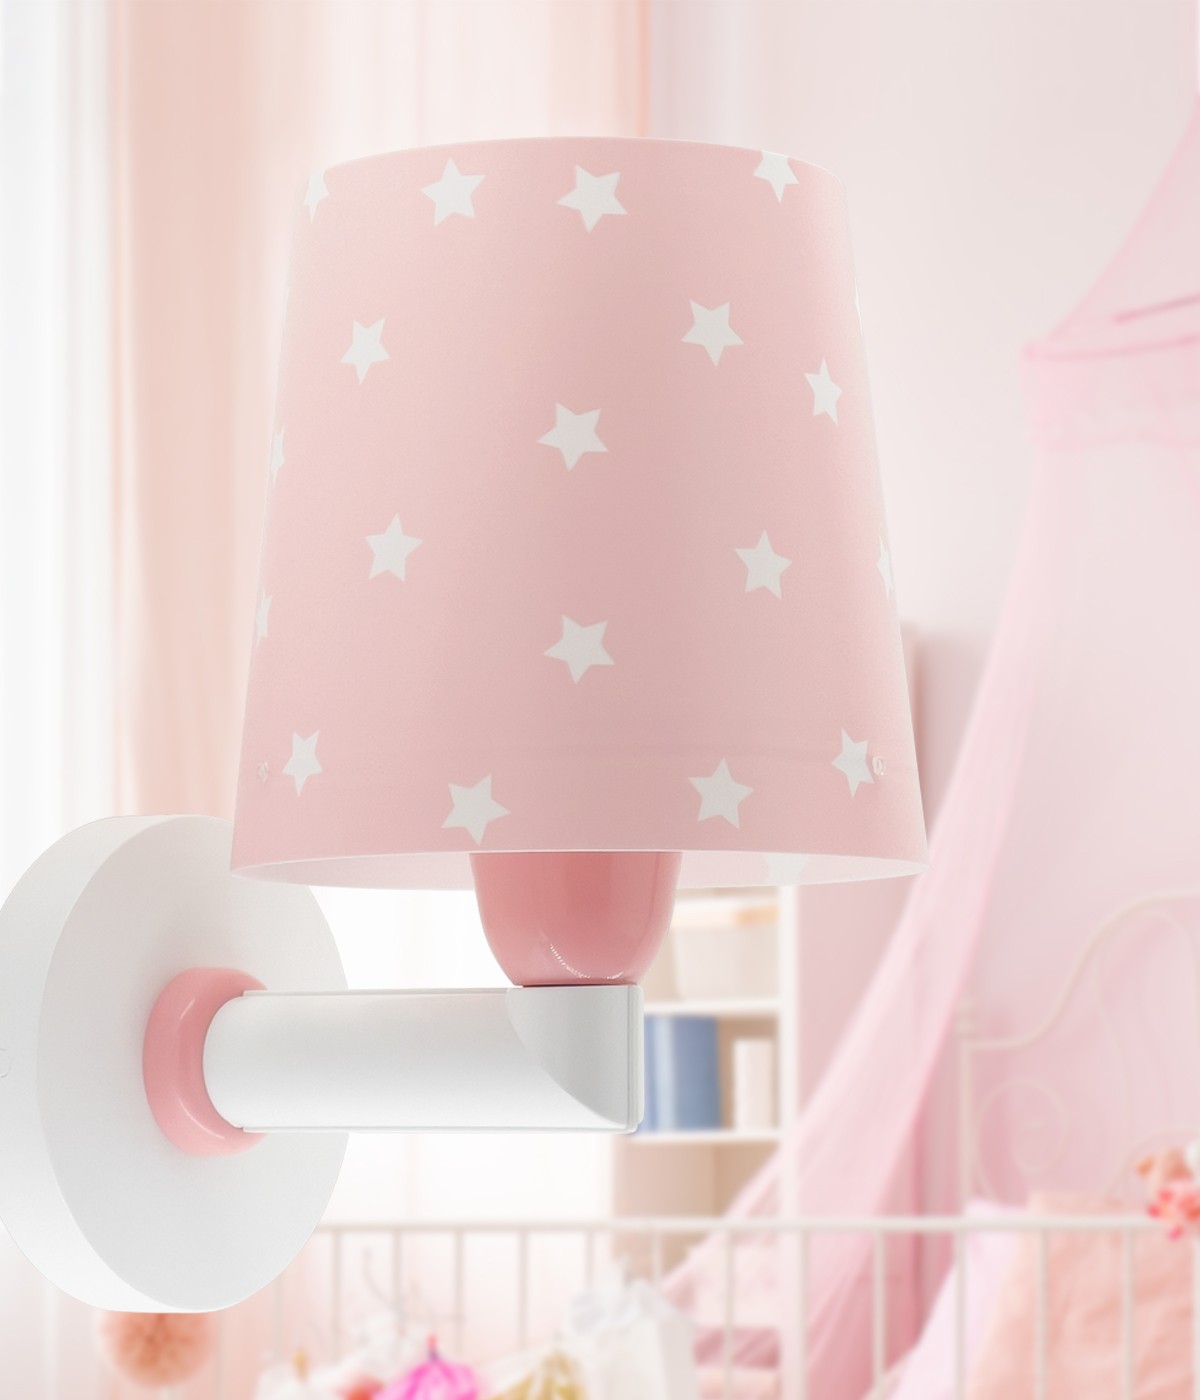 Wall lamp Star Light pink